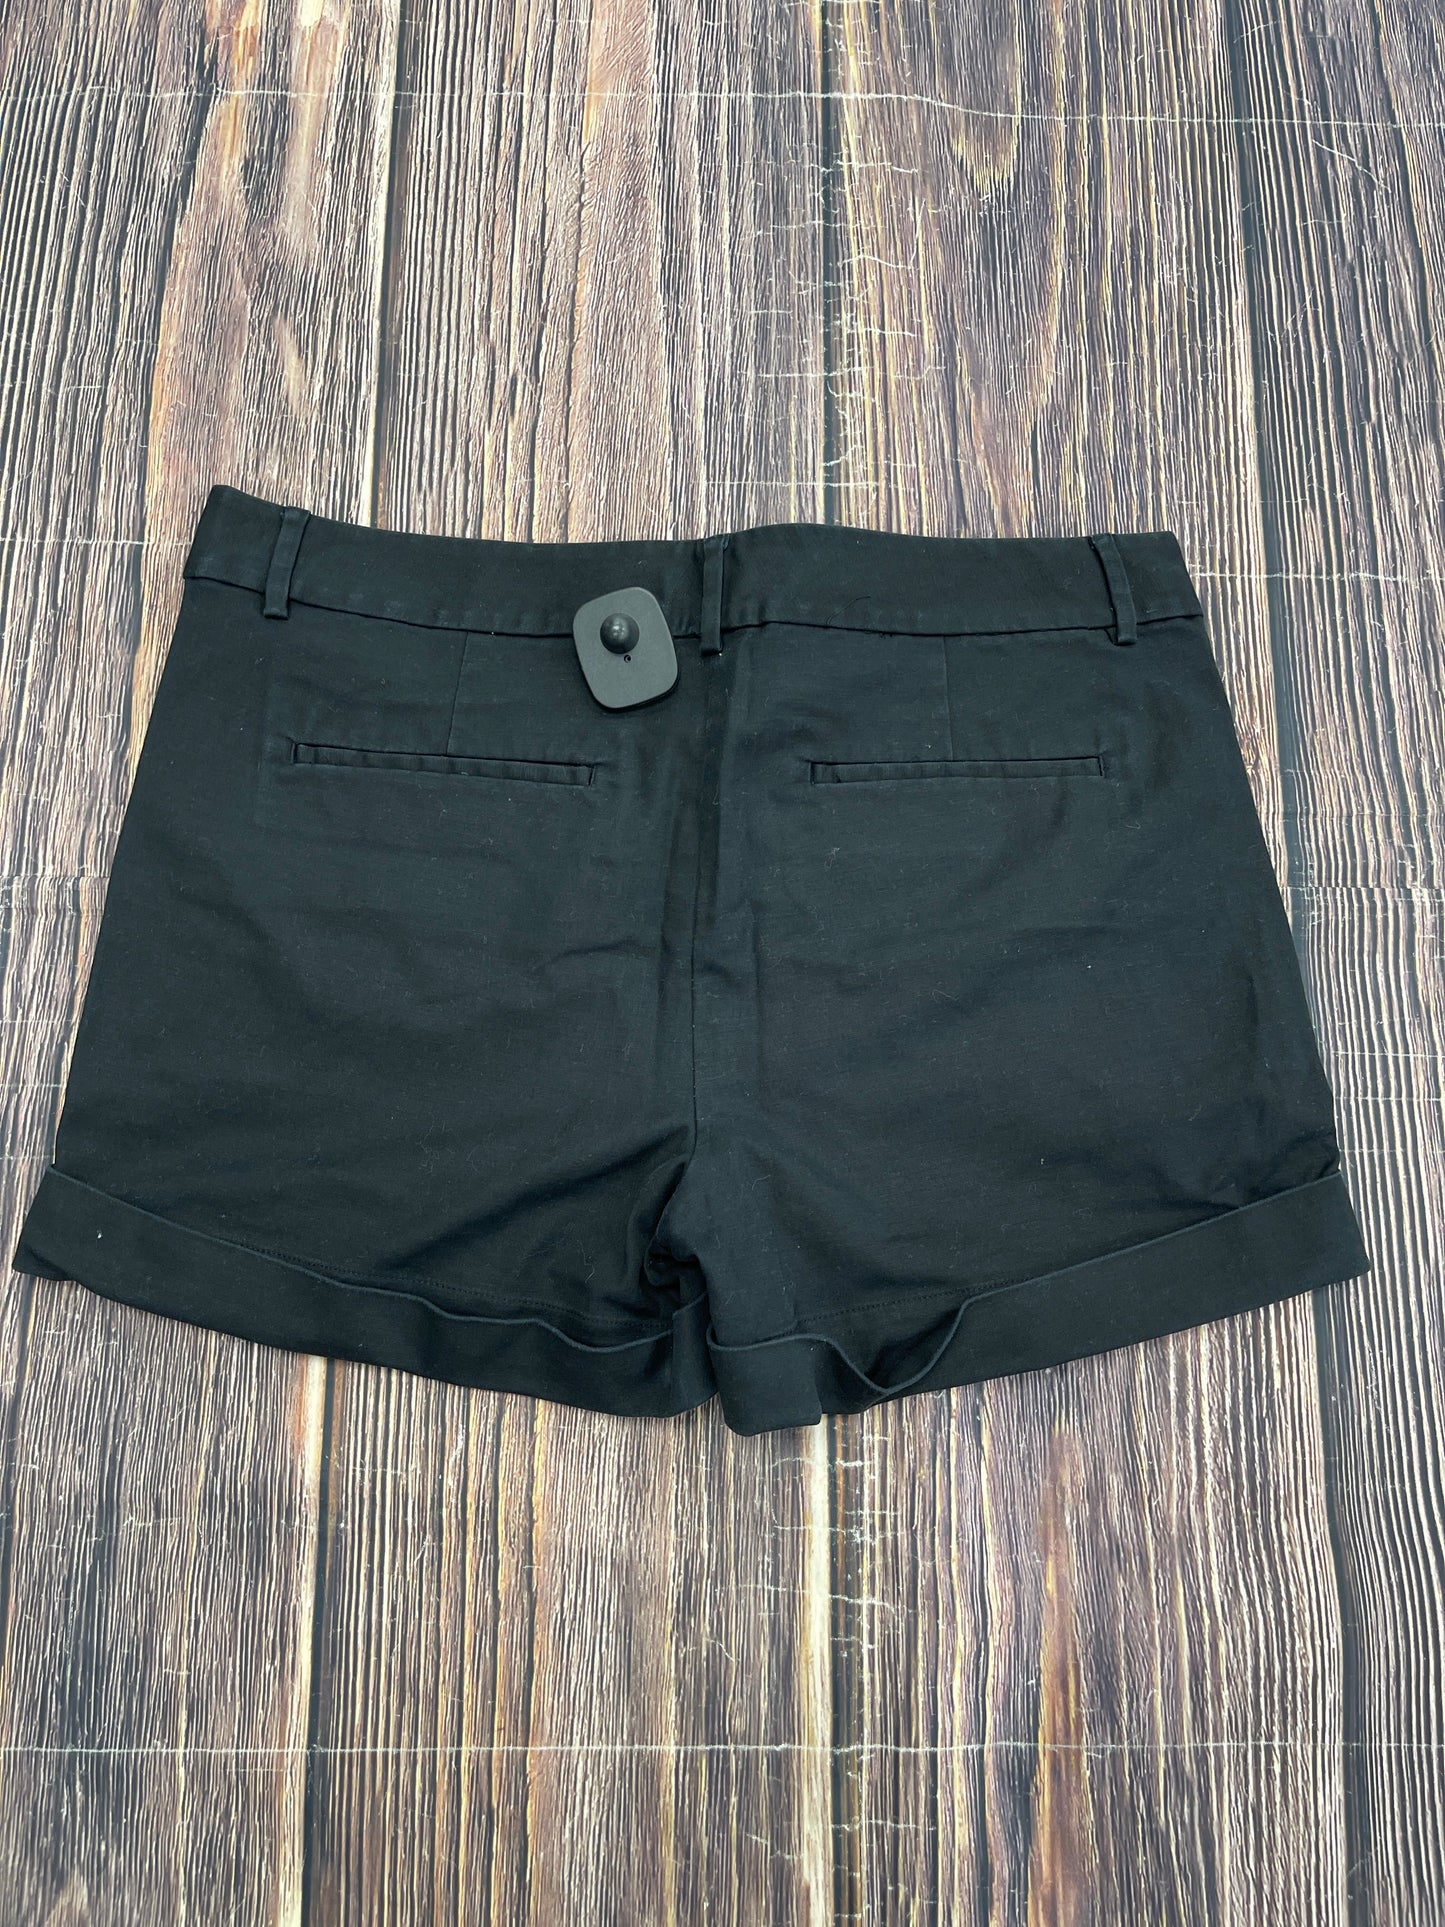 Shorts By Joe Fresh  Size: 10